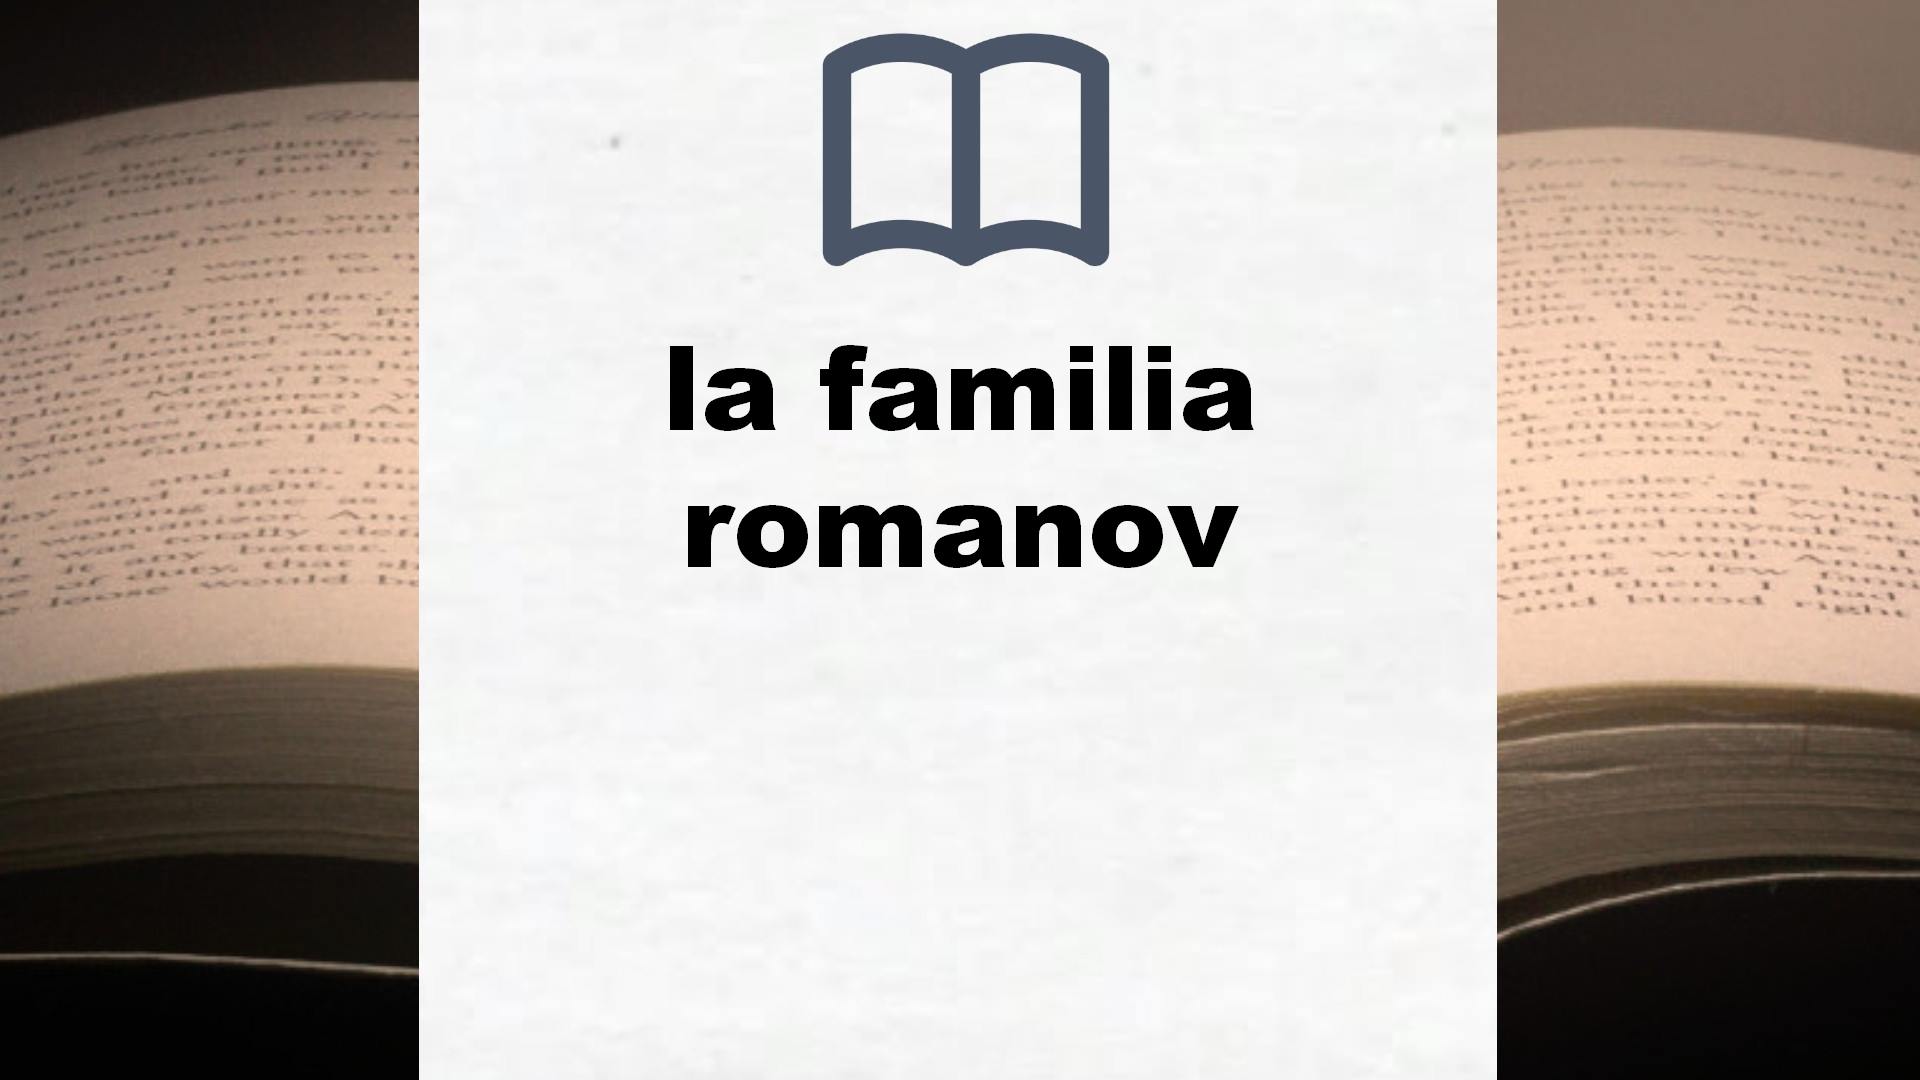 Libros sobre la familia romanov